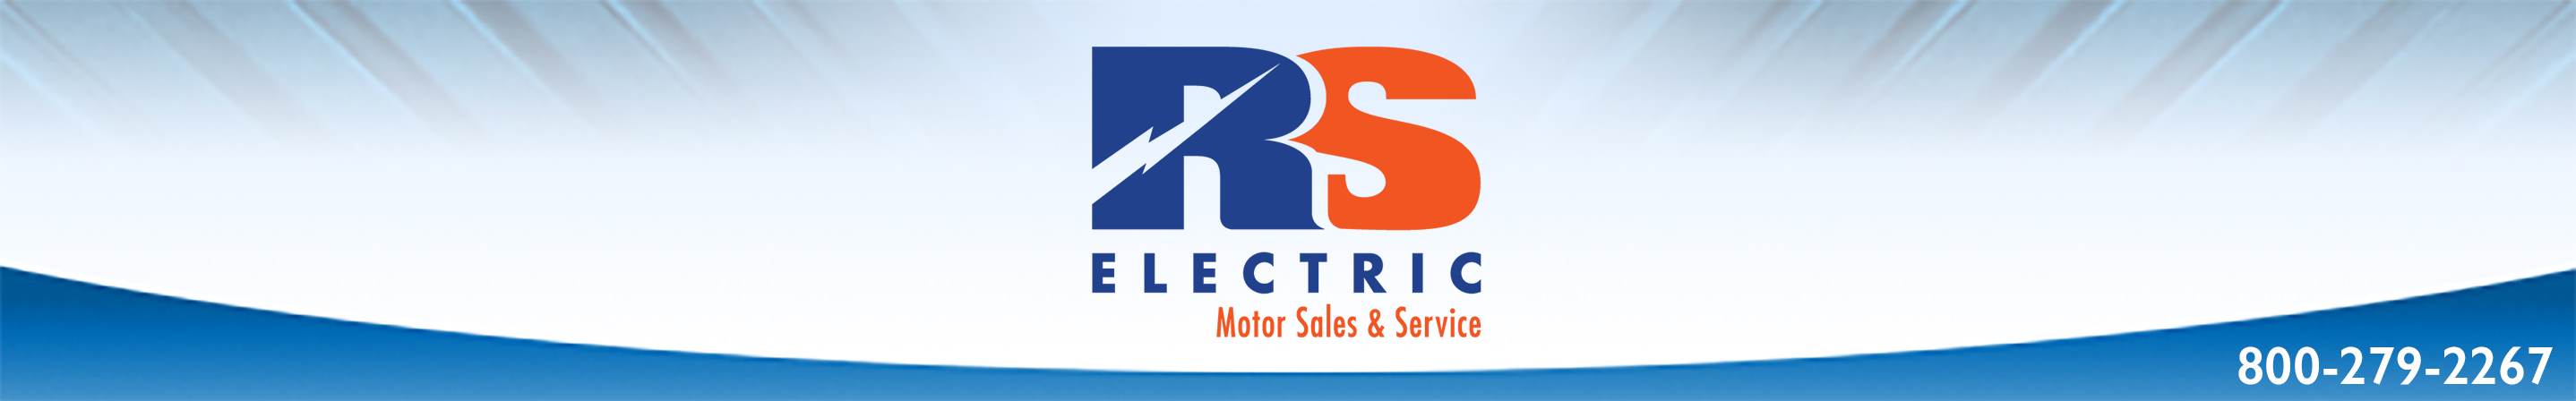 RS Electric Motors Sales & Service 800-279-2267